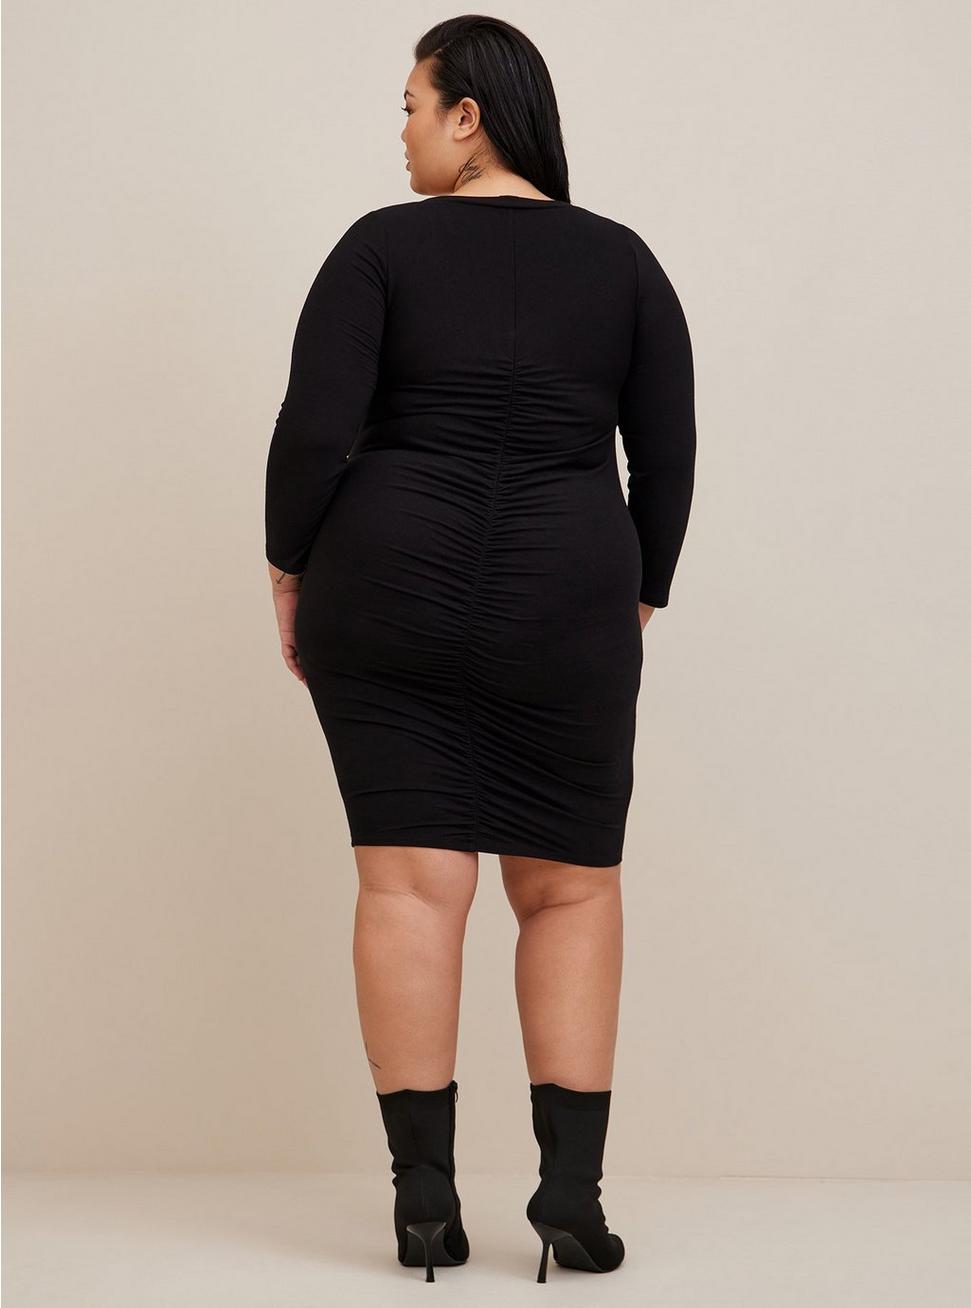 Mini Jersey Bodycon Dress, DEEP BLACK, alternate